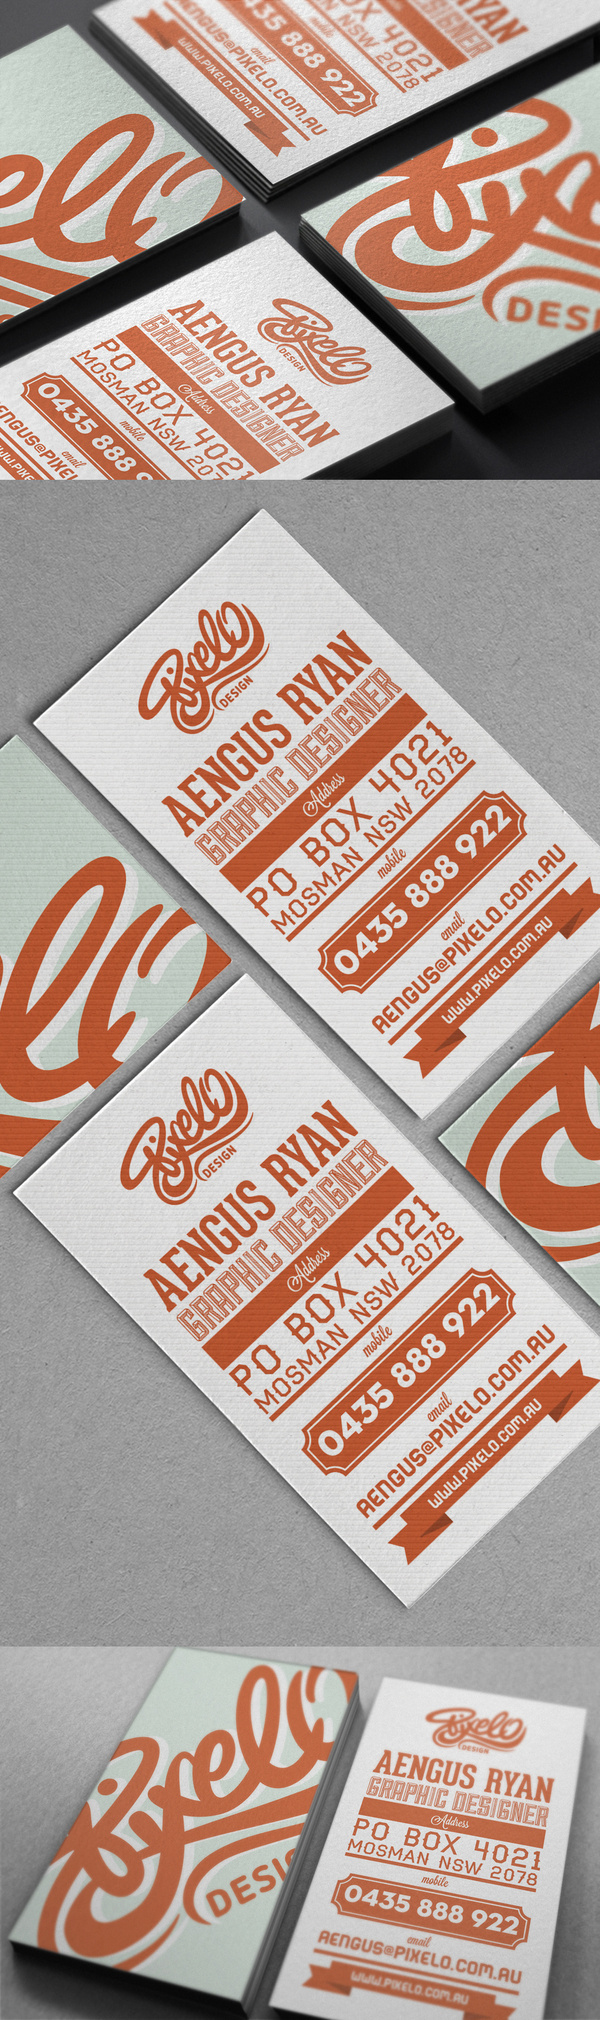 Pixelo Corporate identity // Branding #business #branding #design #retro #orange #logo #cards